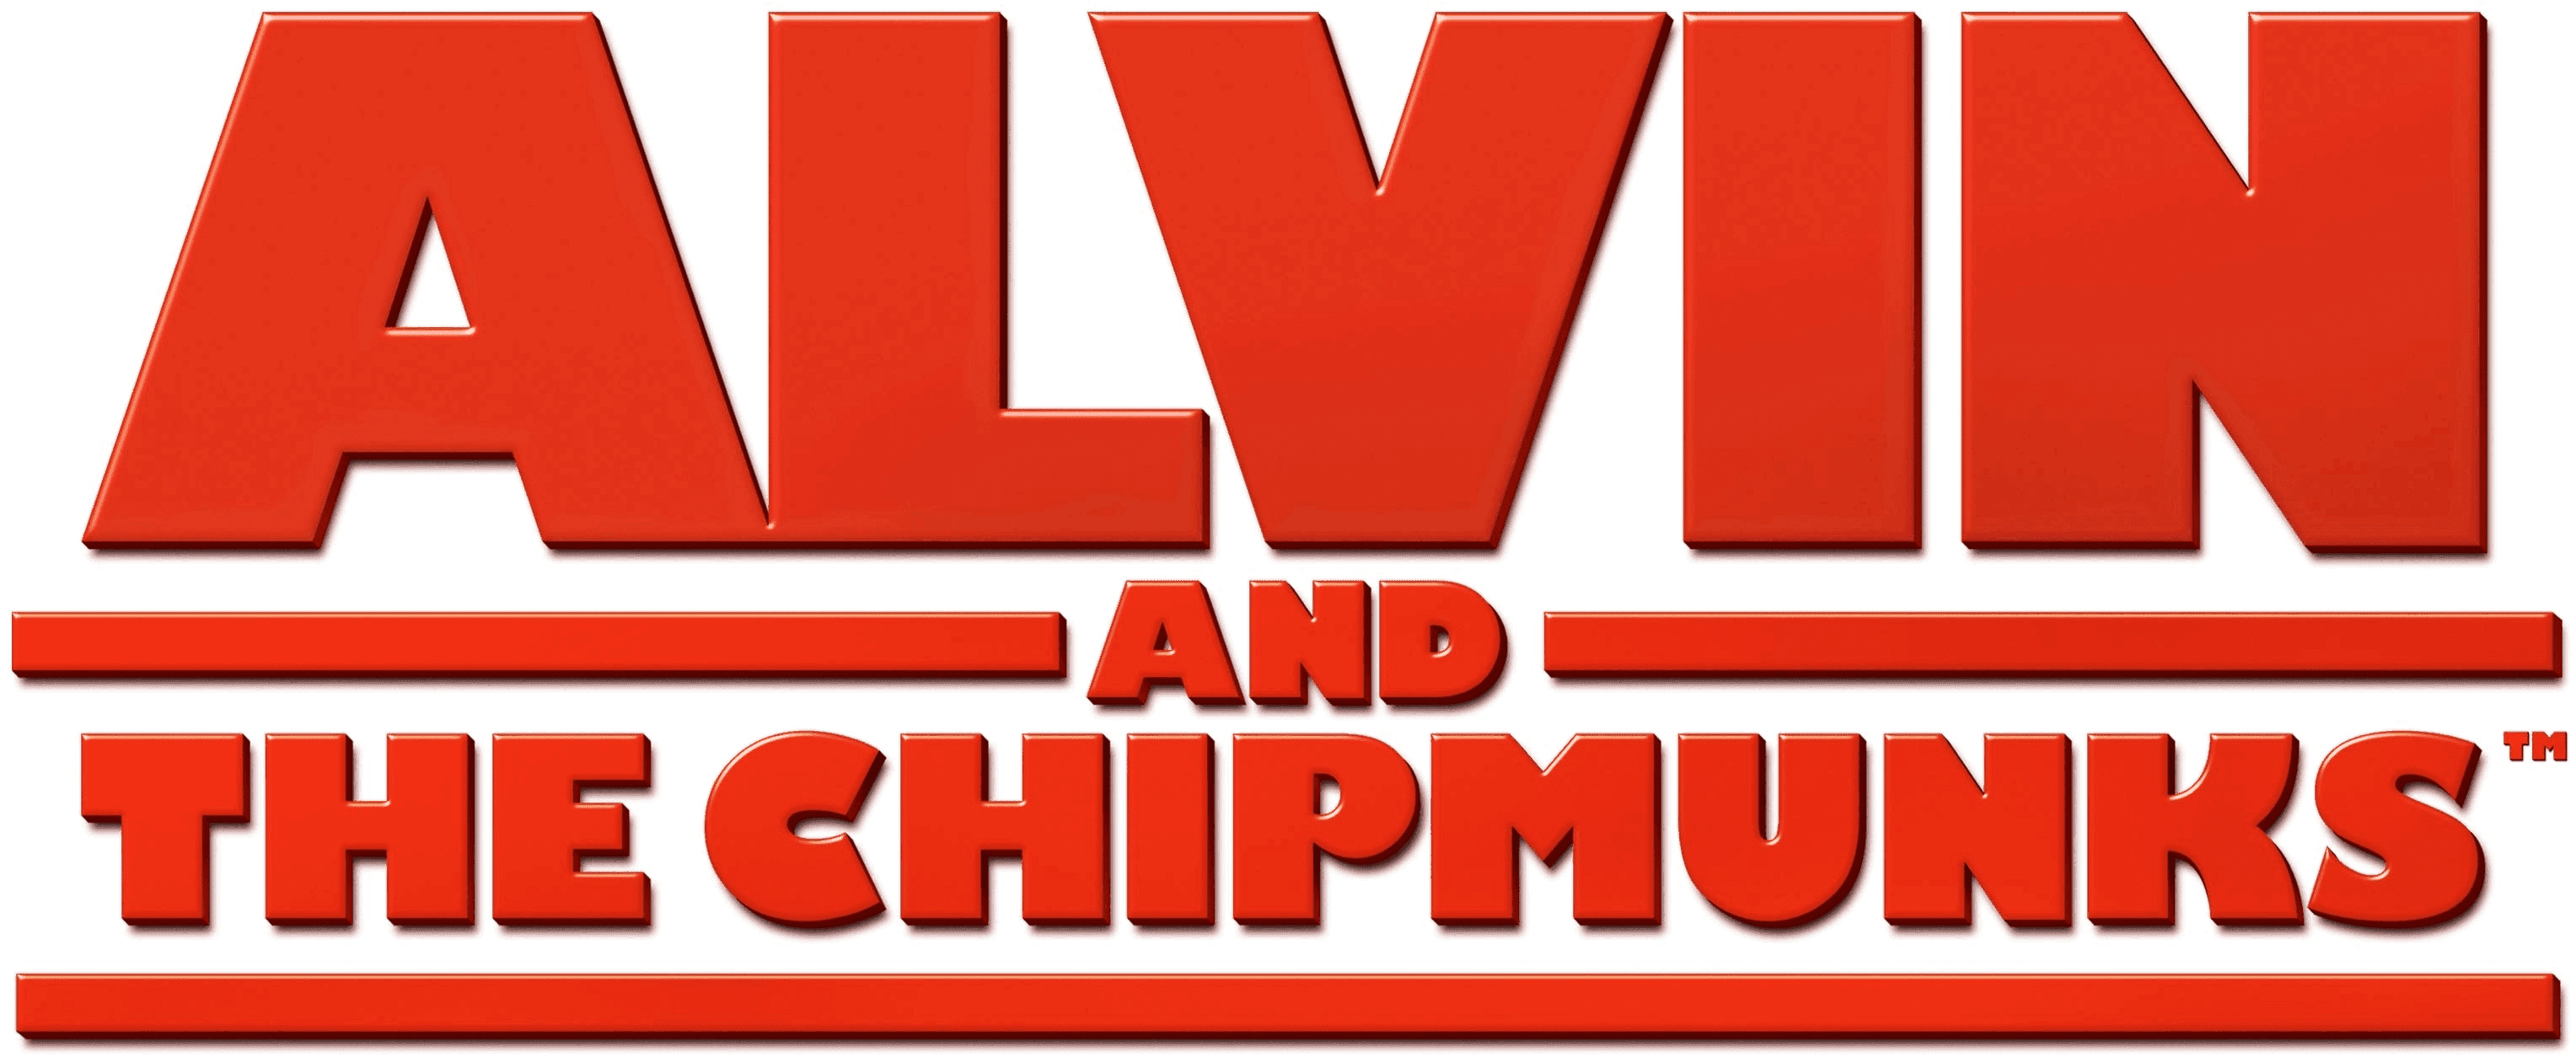 Alvin and the Chipmunks logo